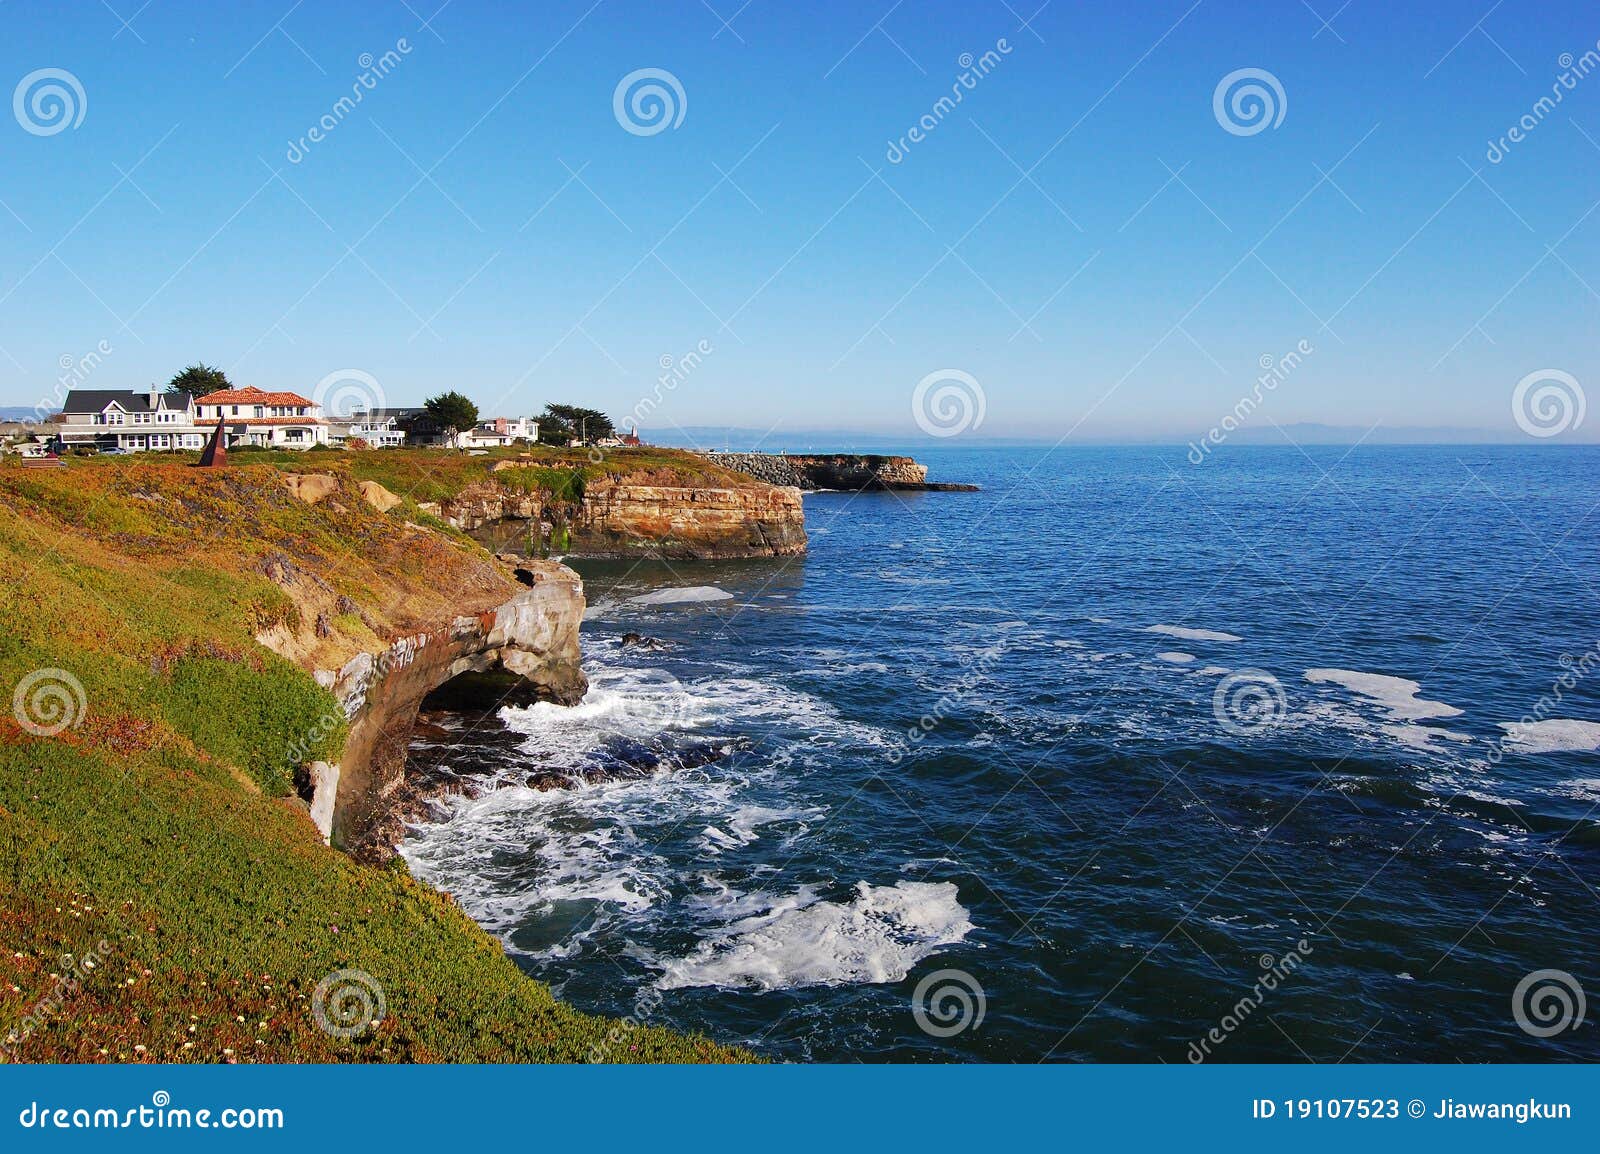 rocky sea shore in santa cruz, california